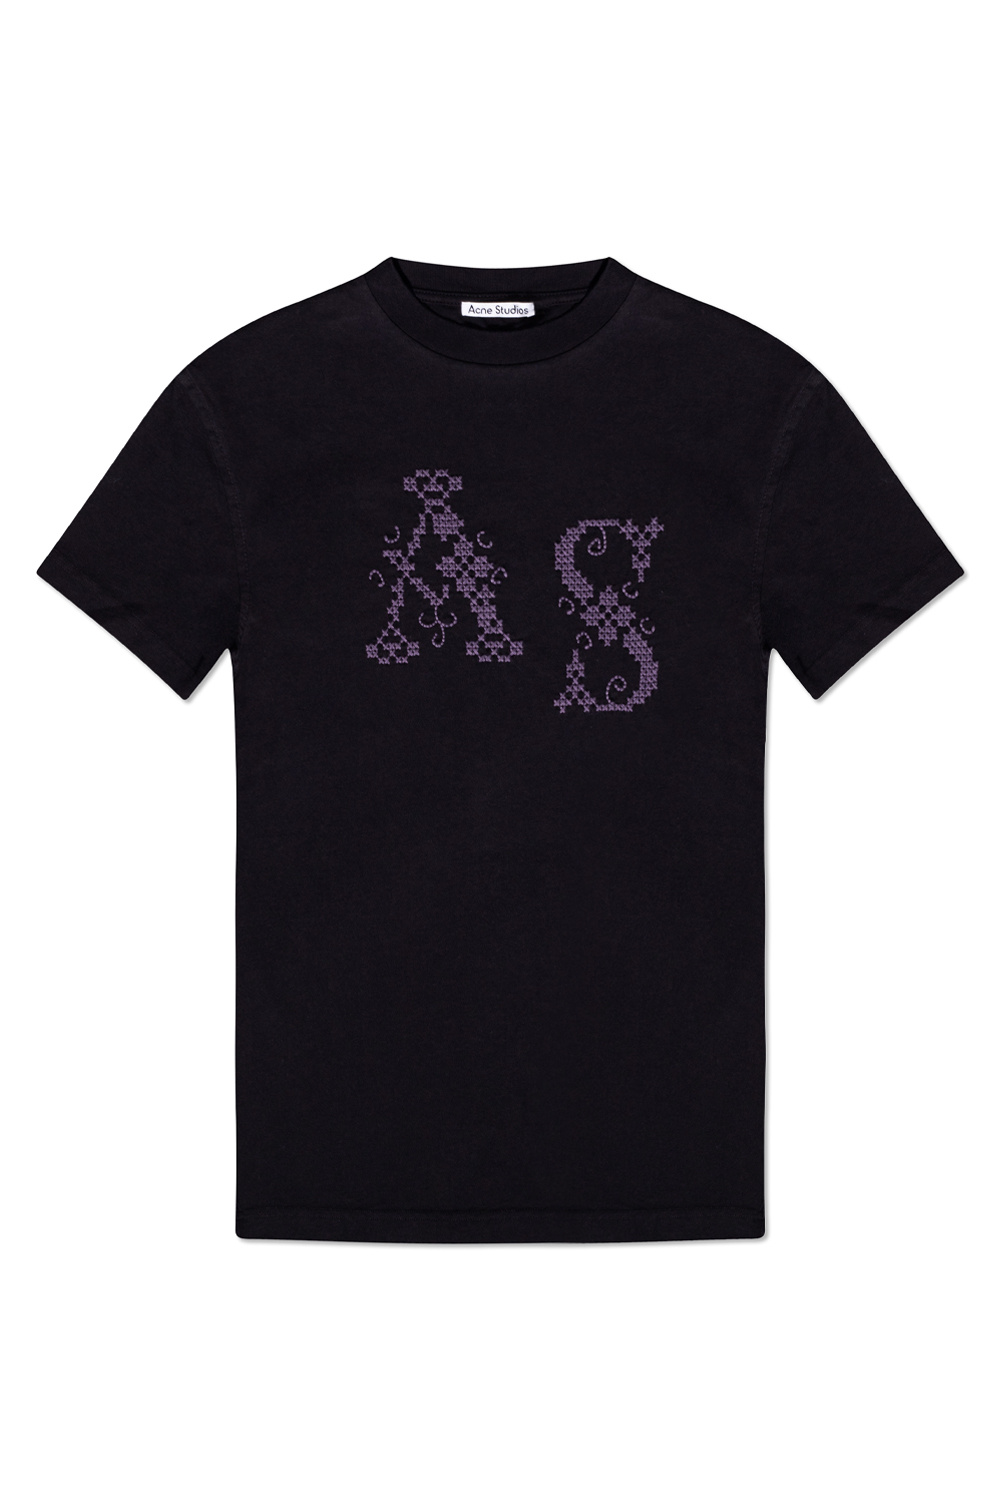 Acne Studios Graphic T-shirt